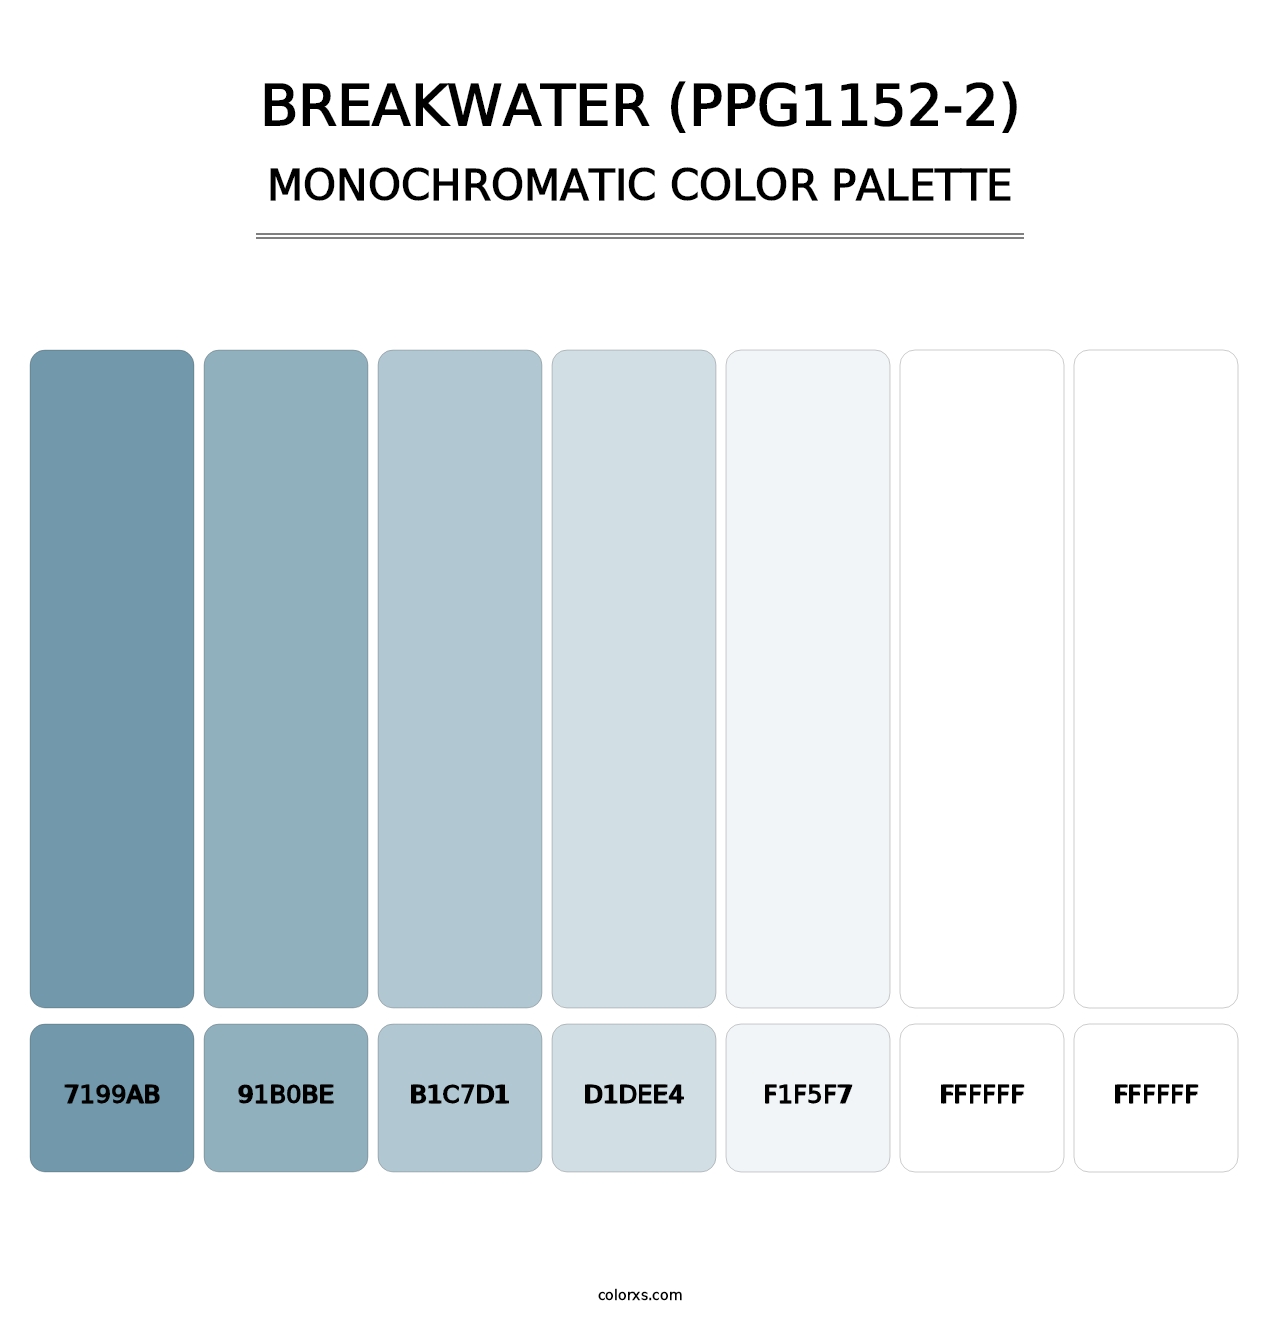 Breakwater (PPG1152-2) - Monochromatic Color Palette